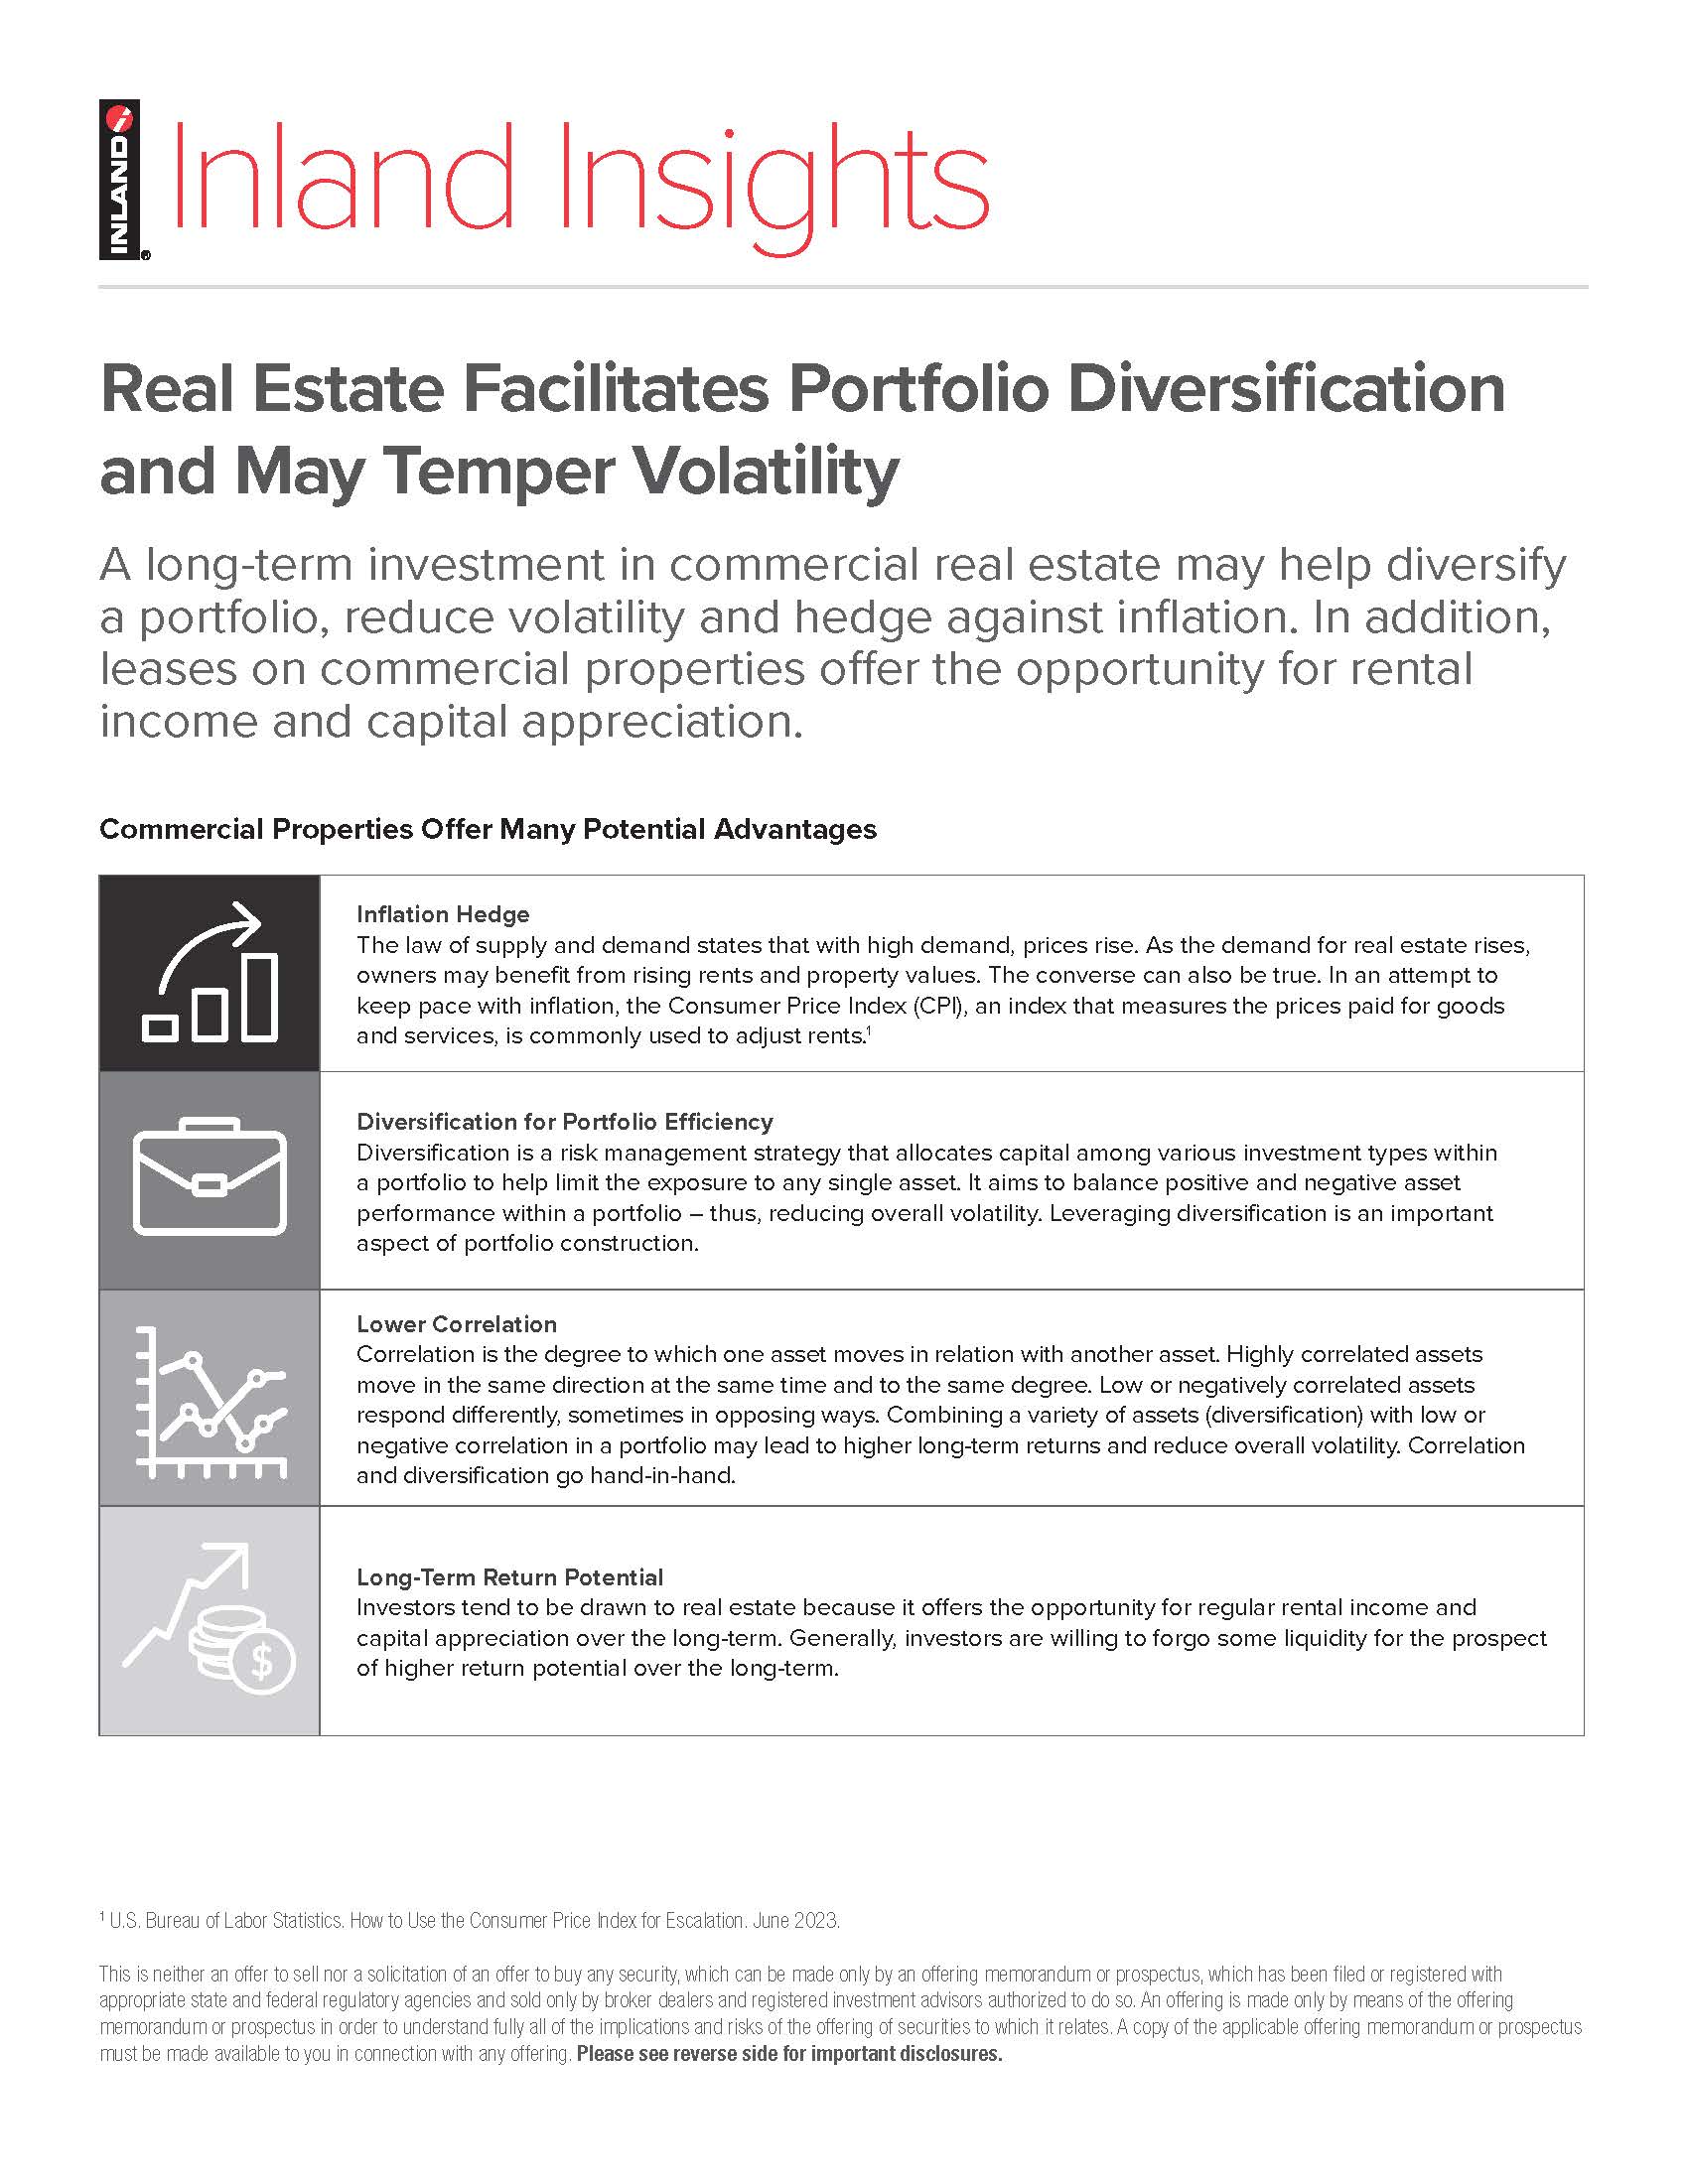 Real Estate Facilitates Portfolio Diversification and May Temper Volatility